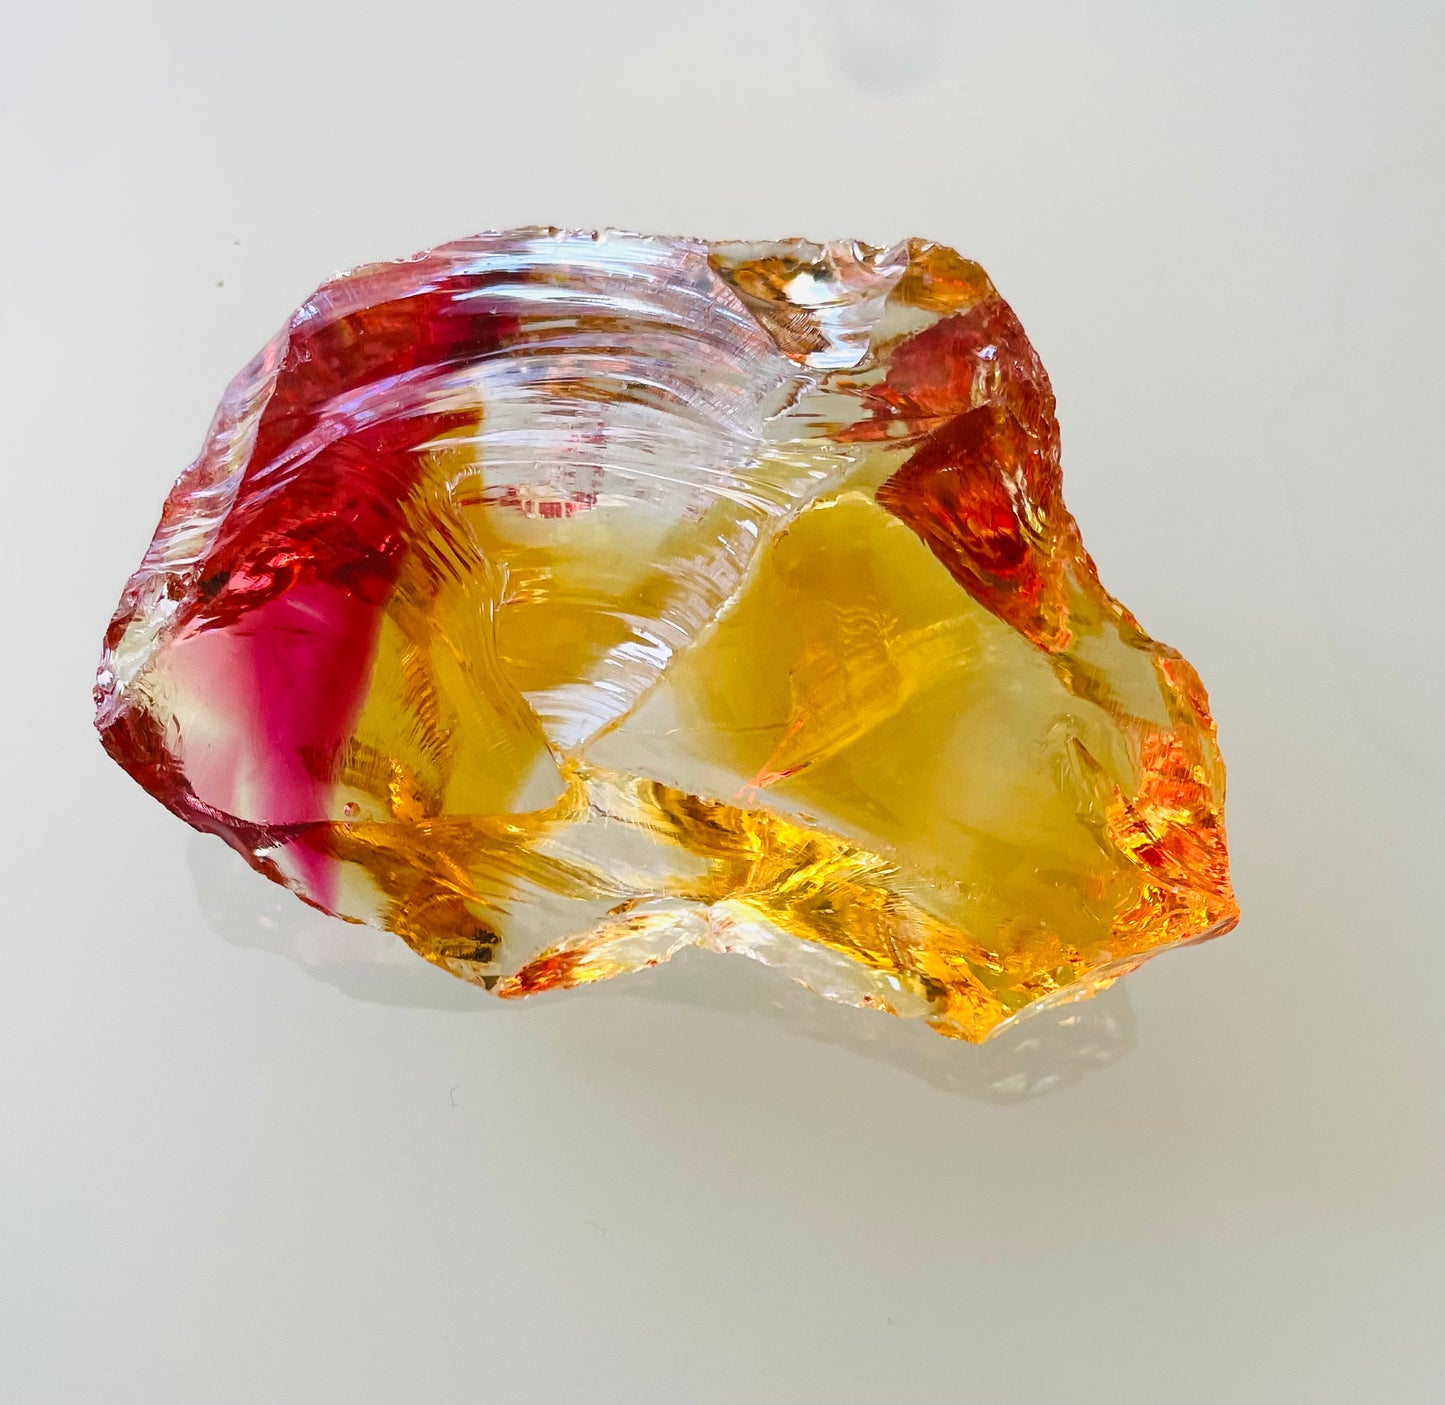 ANDARA cristallin multicolore 113 g | Boutique cristaux Andaras